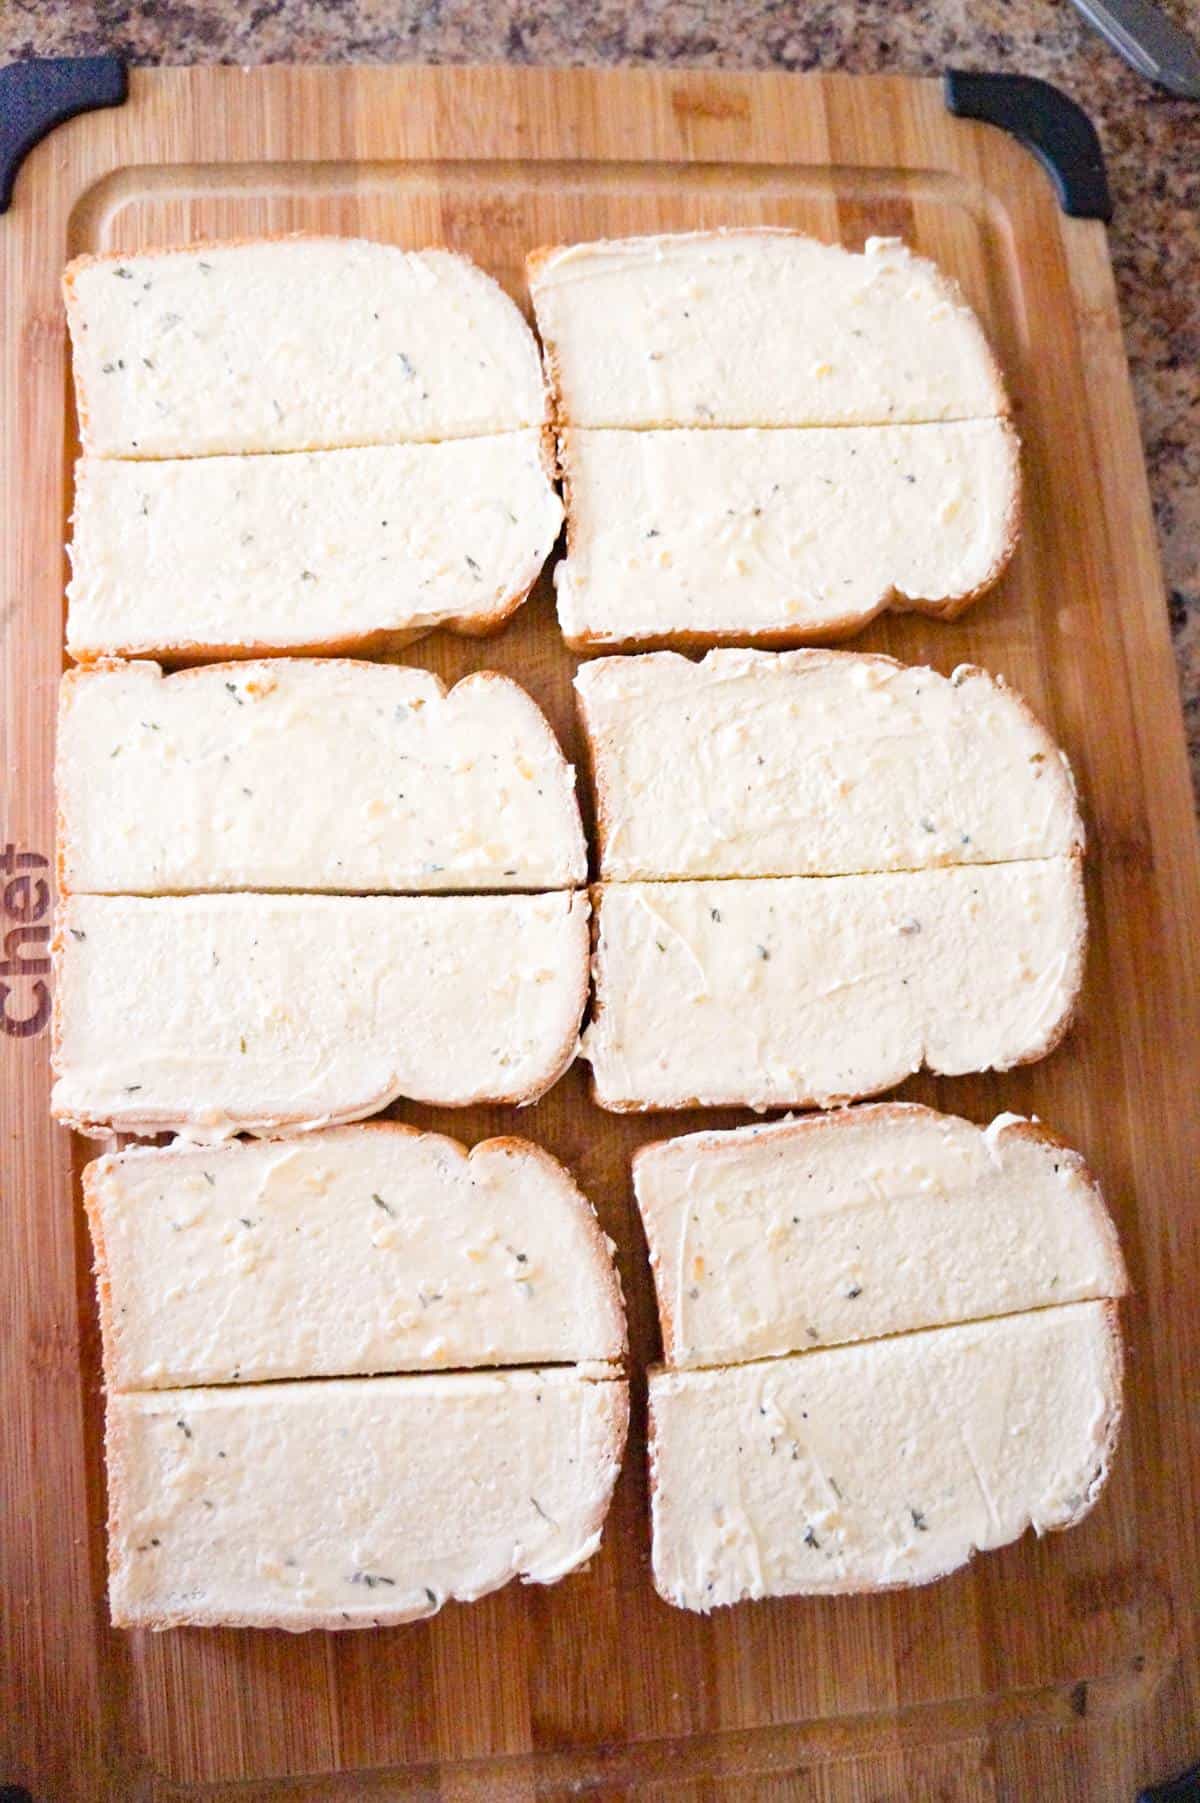 slices of bread with garlic margarine cut in half